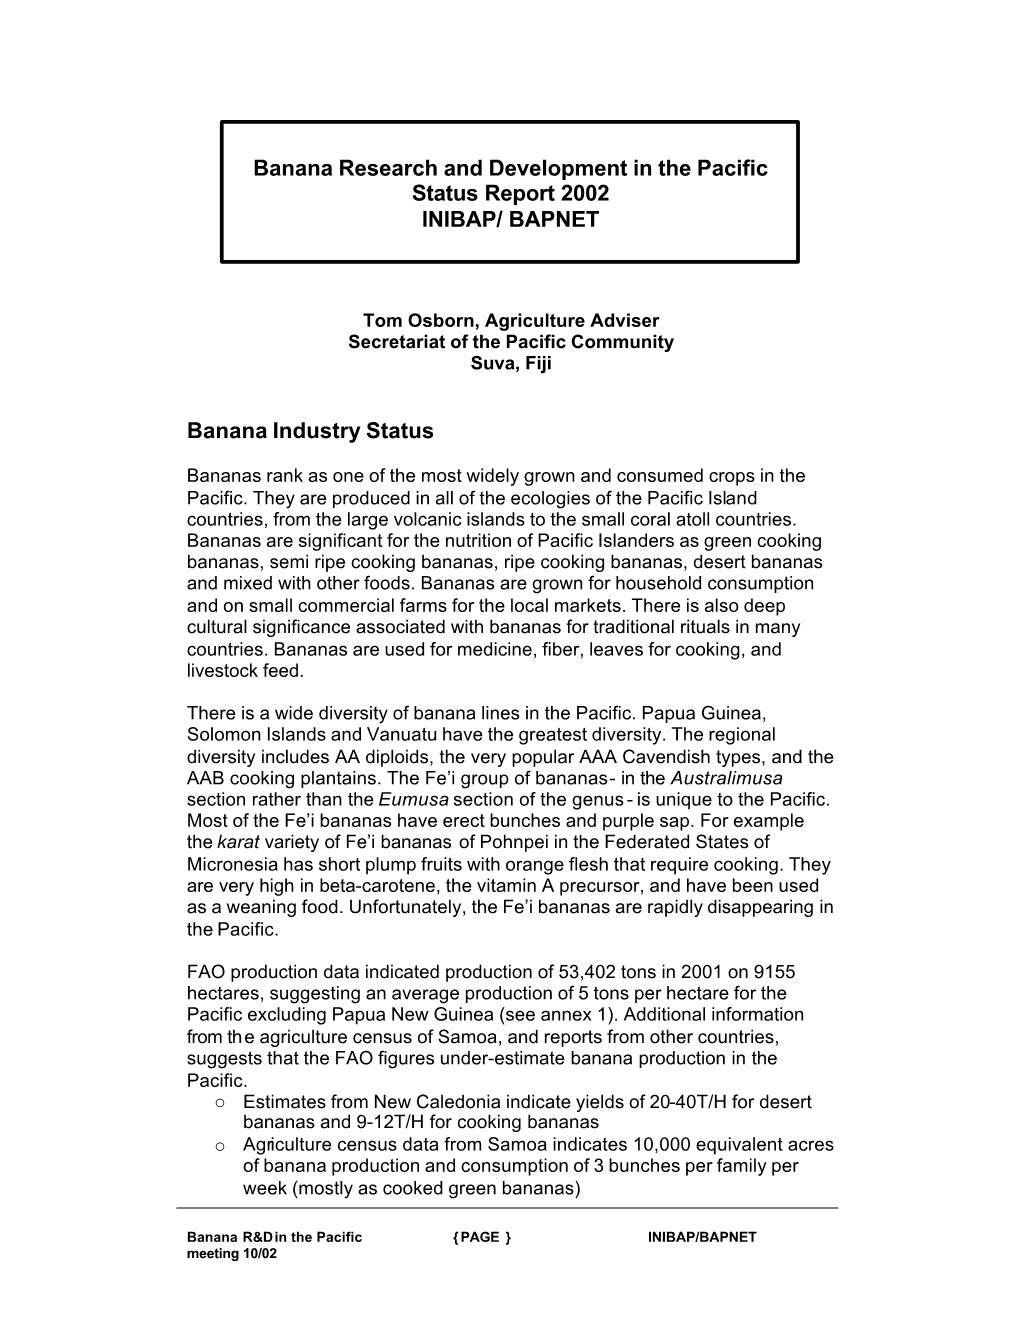 Banana Research and Development in the Pacific Status Report 2002 INIBAP/ BAPNET